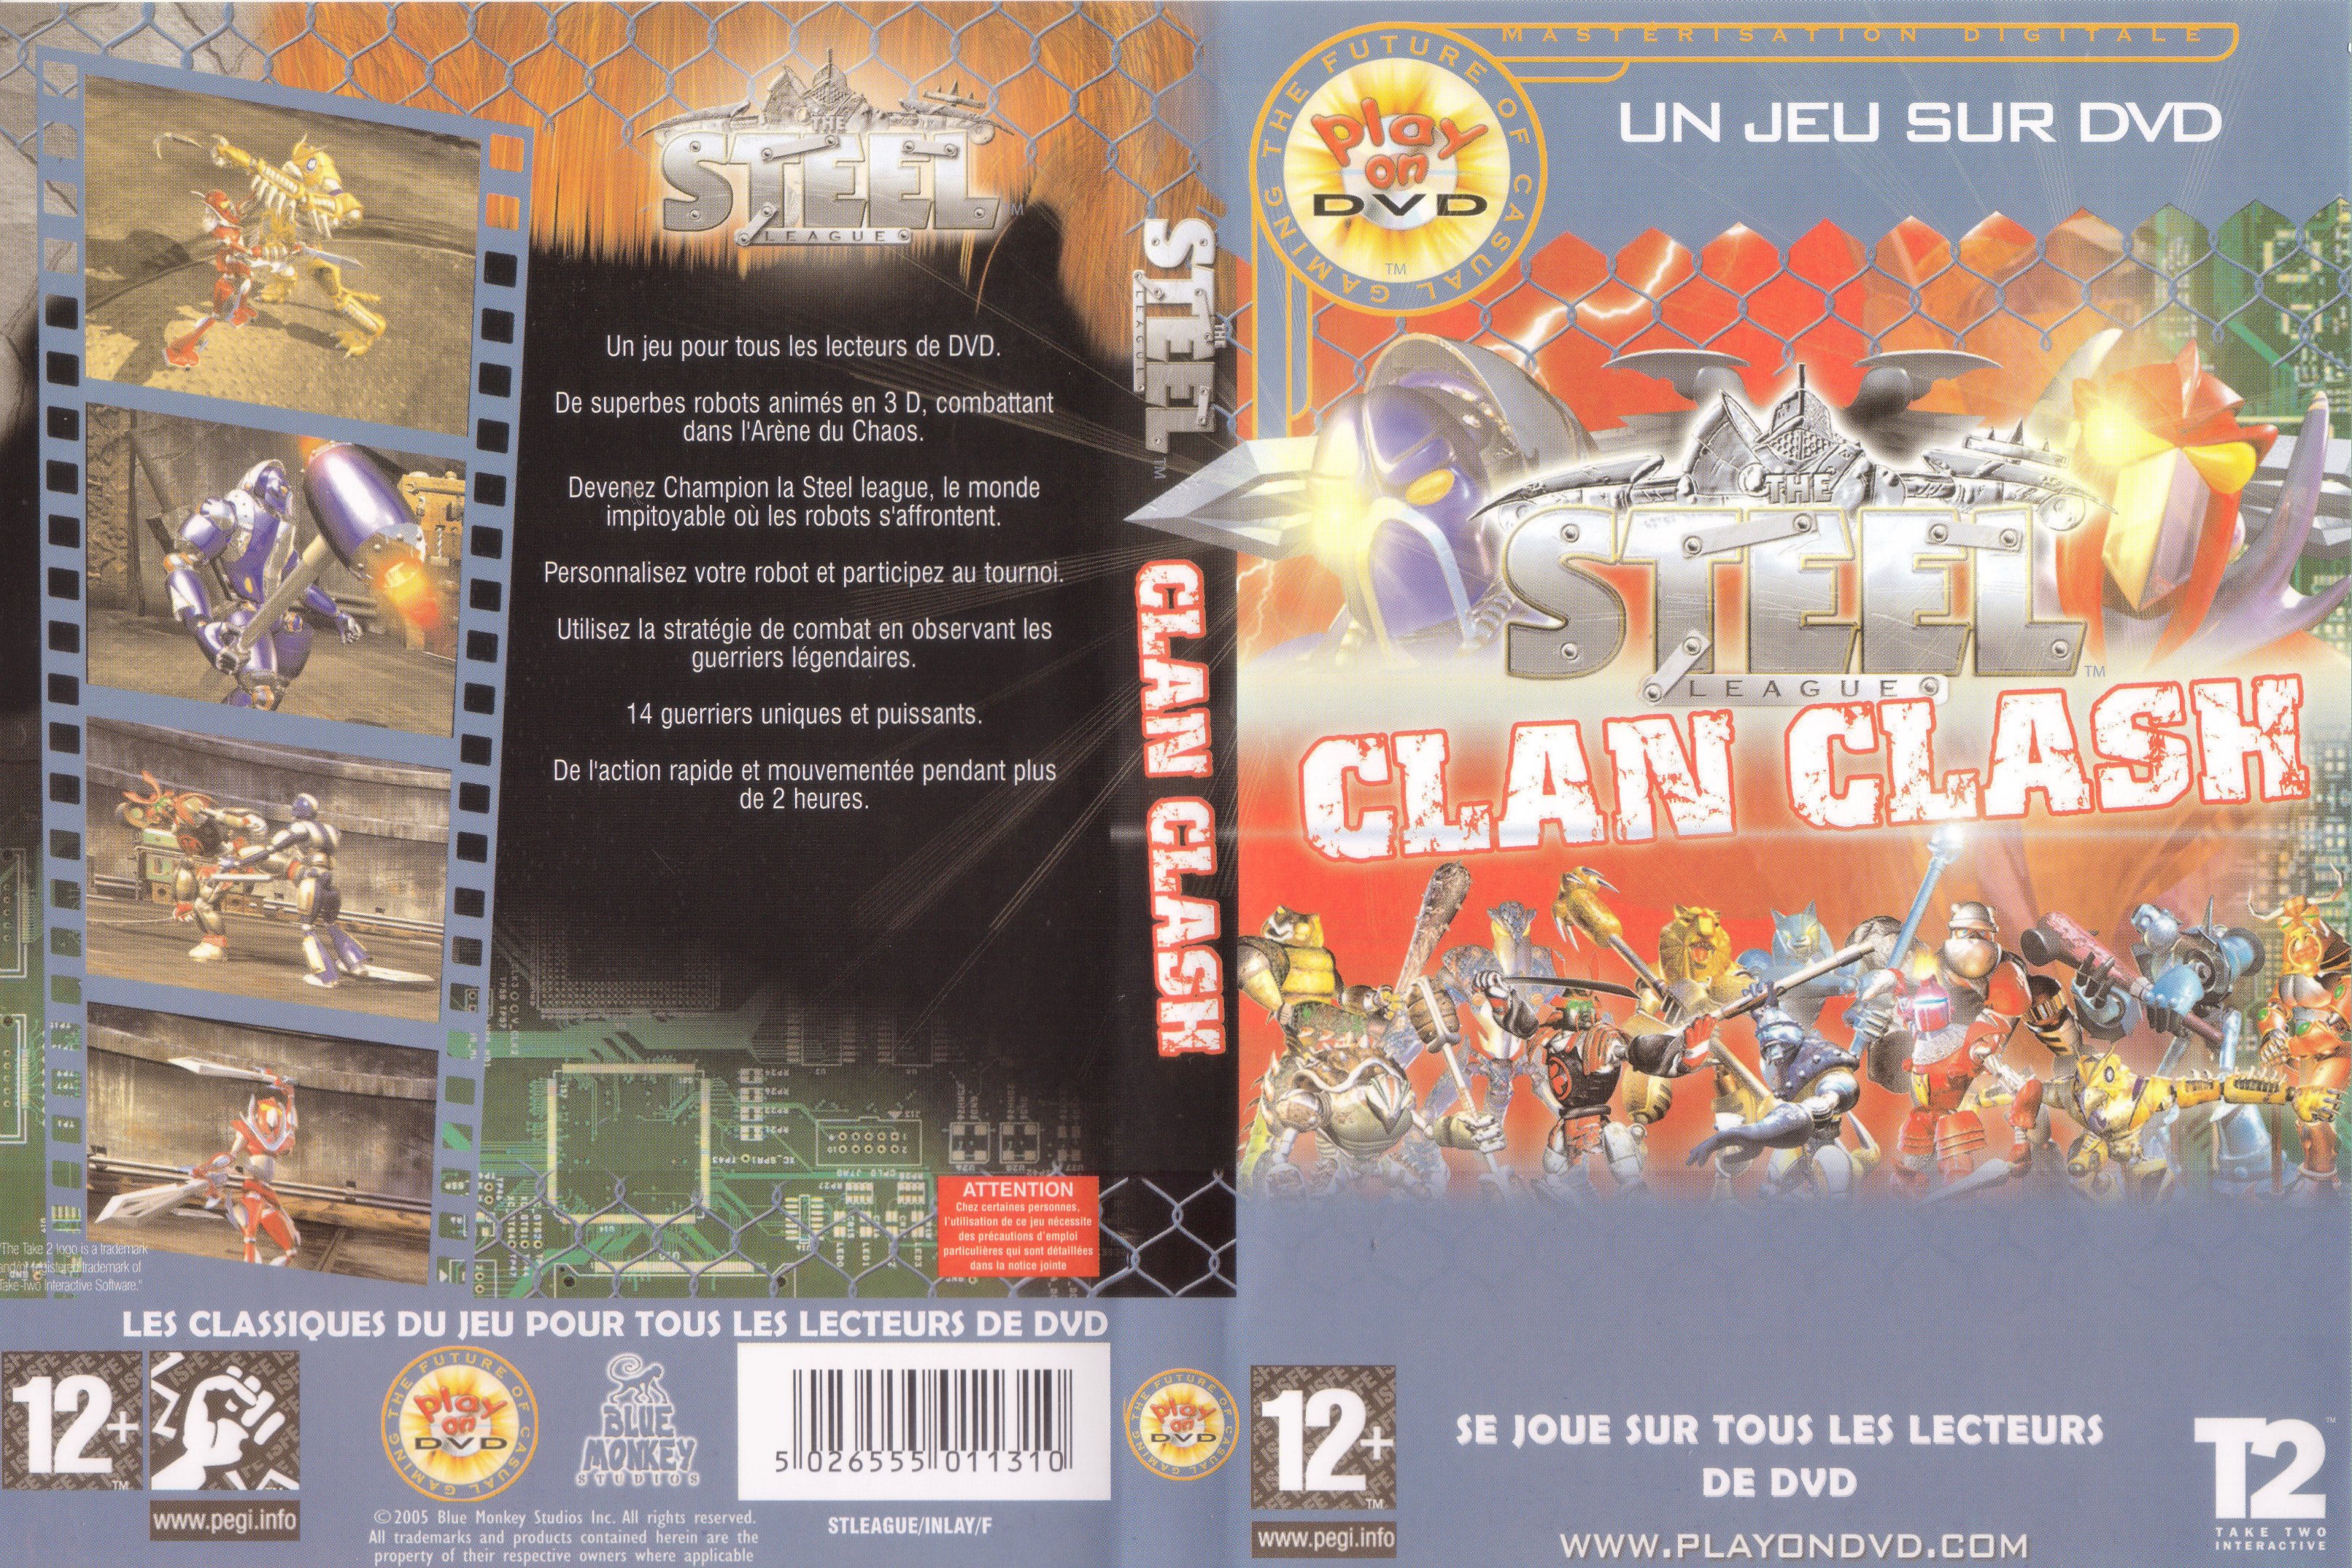 Jaquette DVD Clan clash